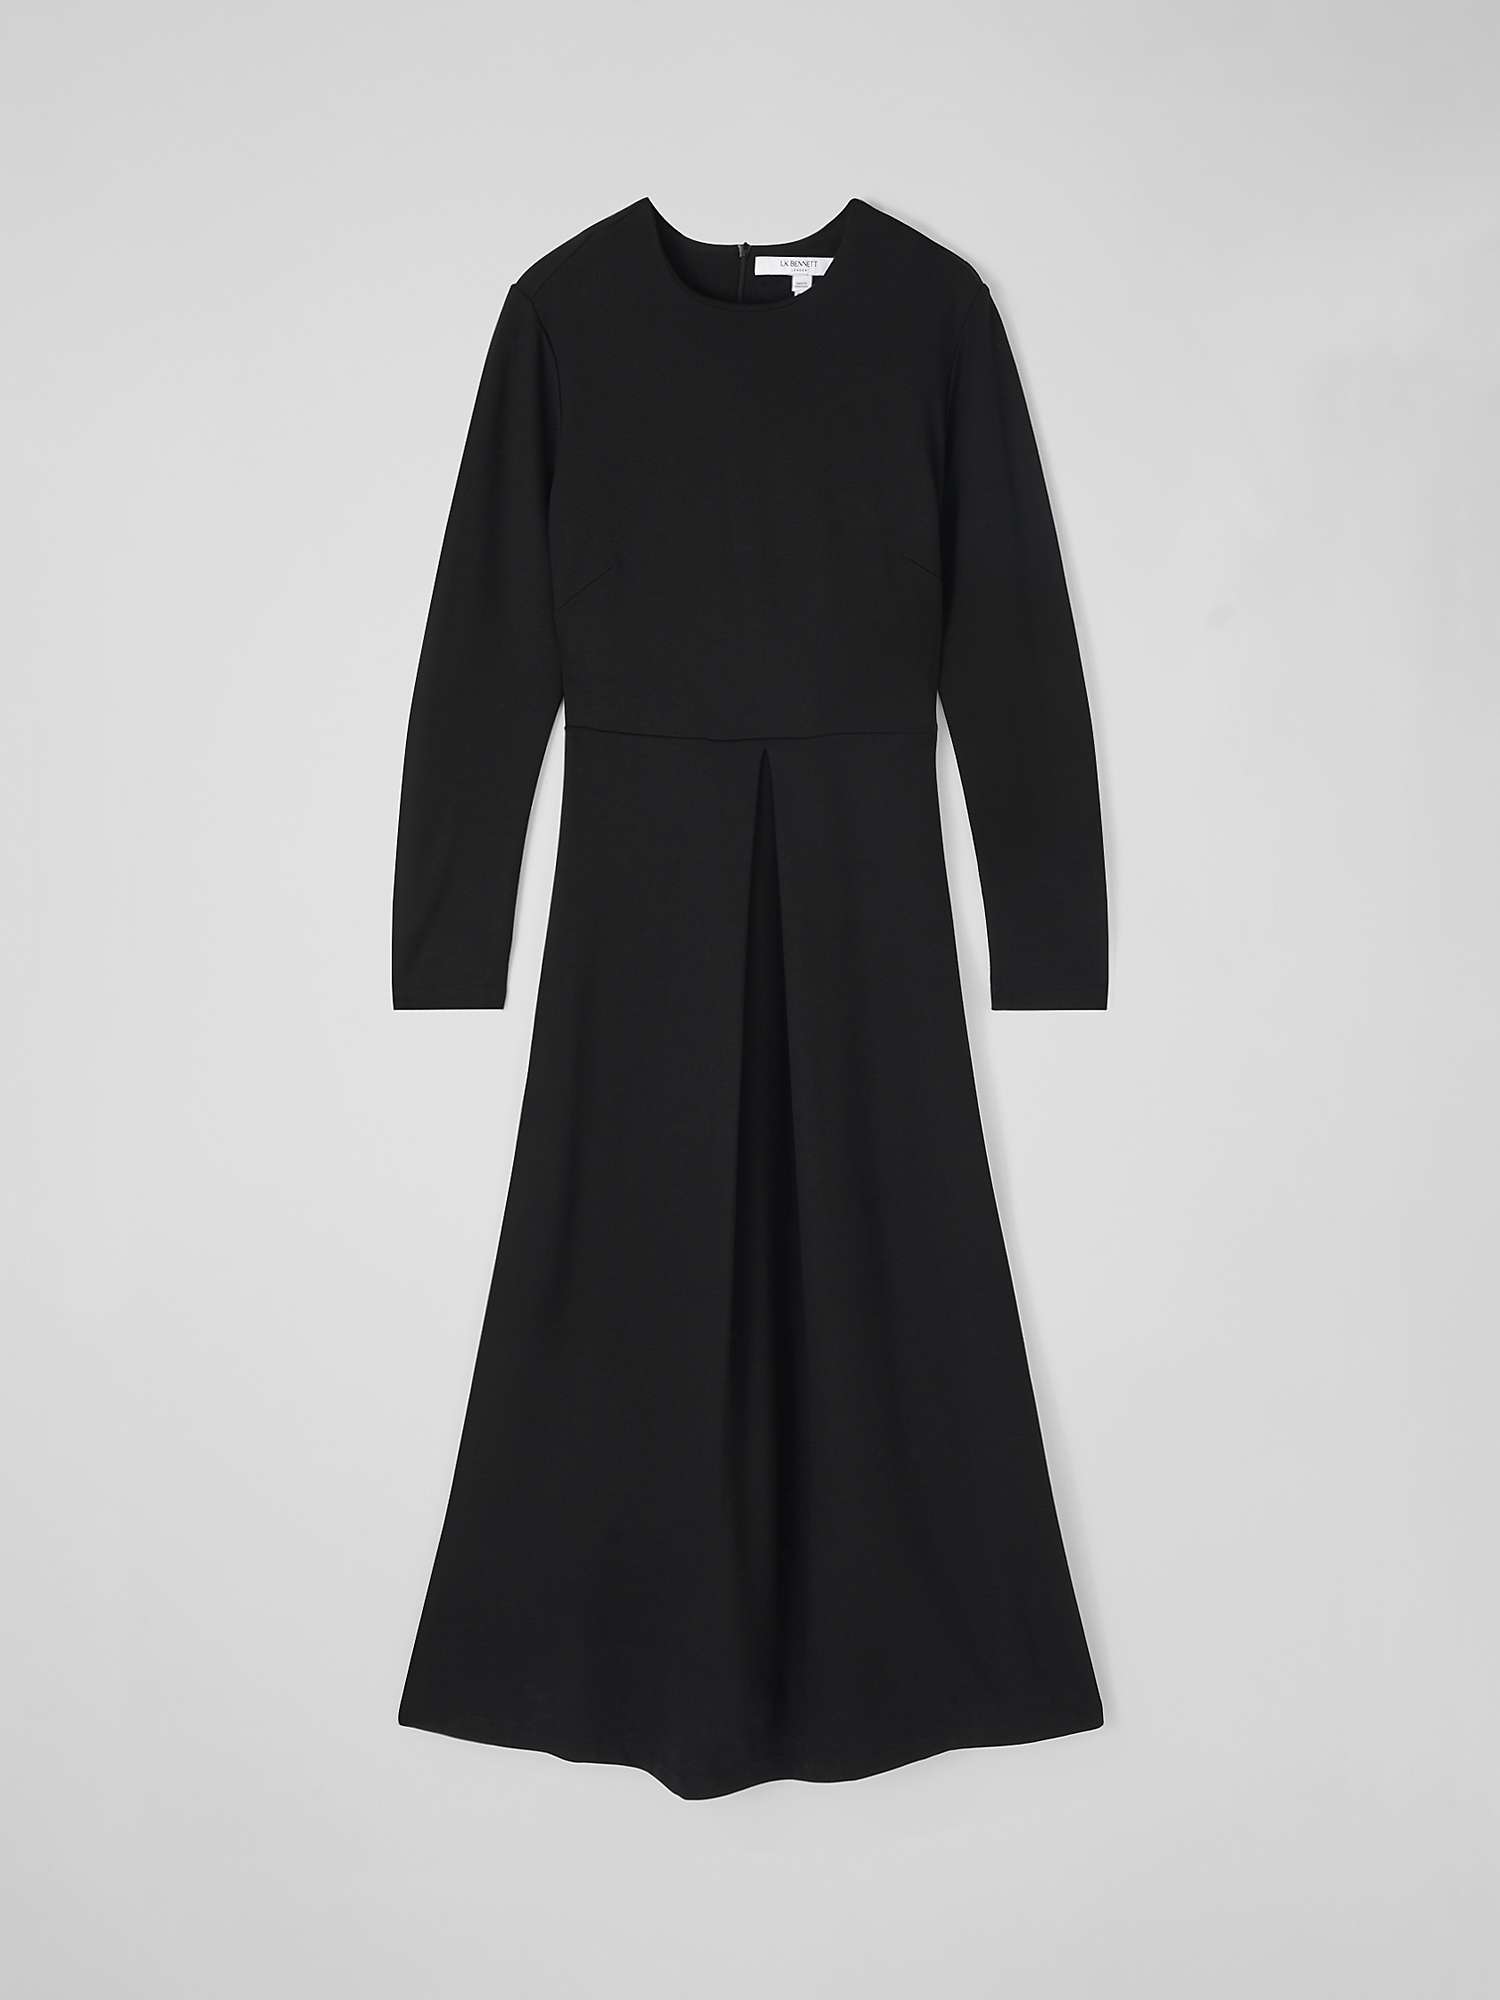 L.K.Bennett Maria Midi Dress, Black at John Lewis & Partners